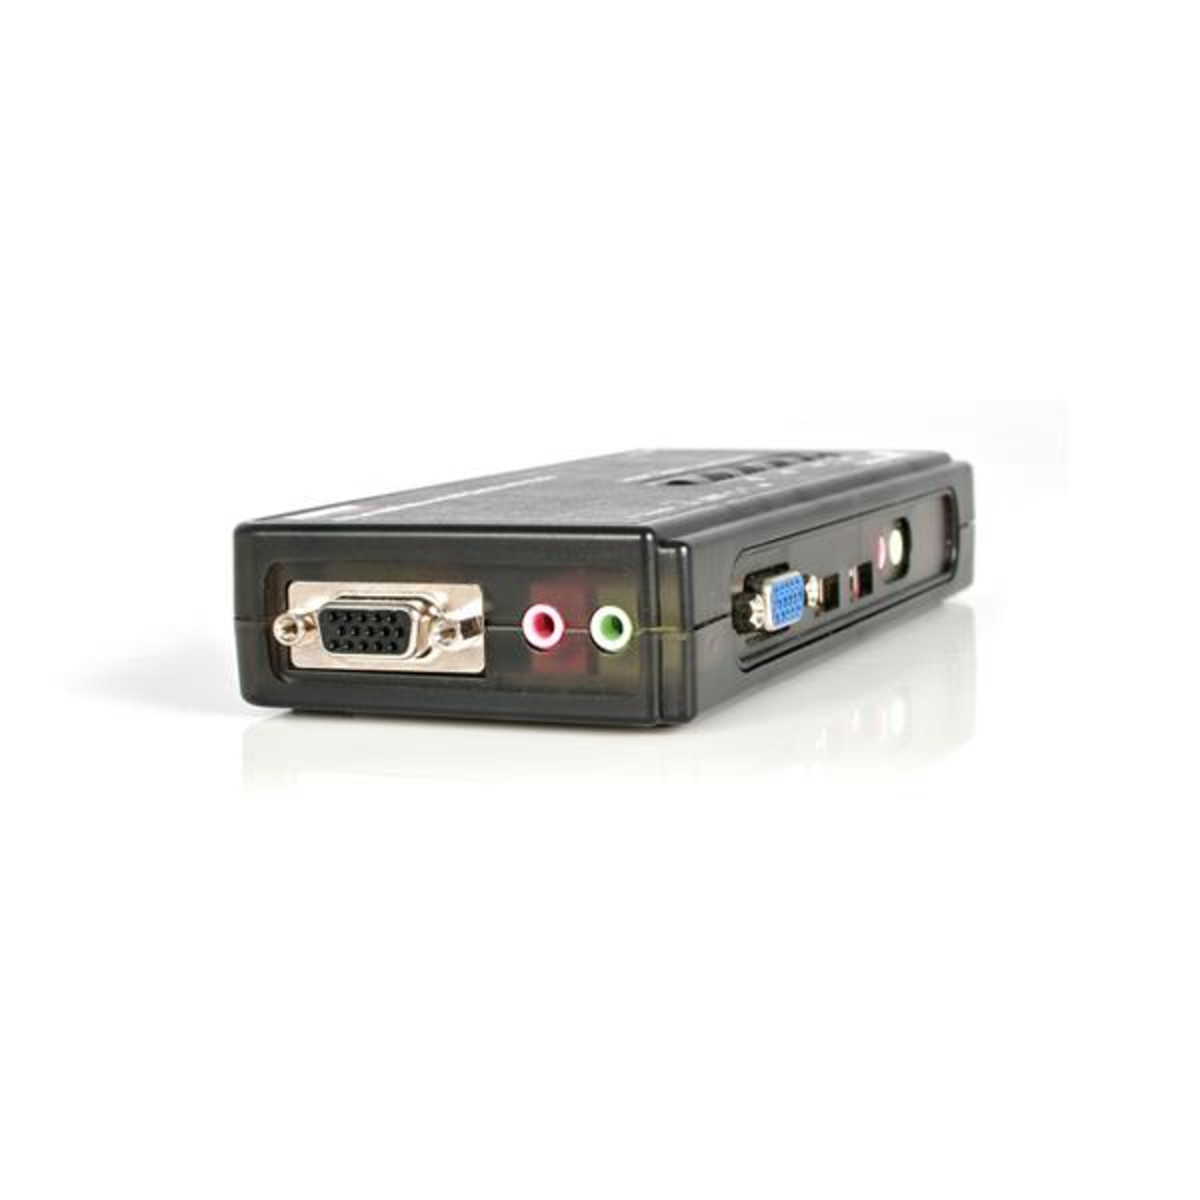 4 Port USB KVM Switch w/ Audio & Cables